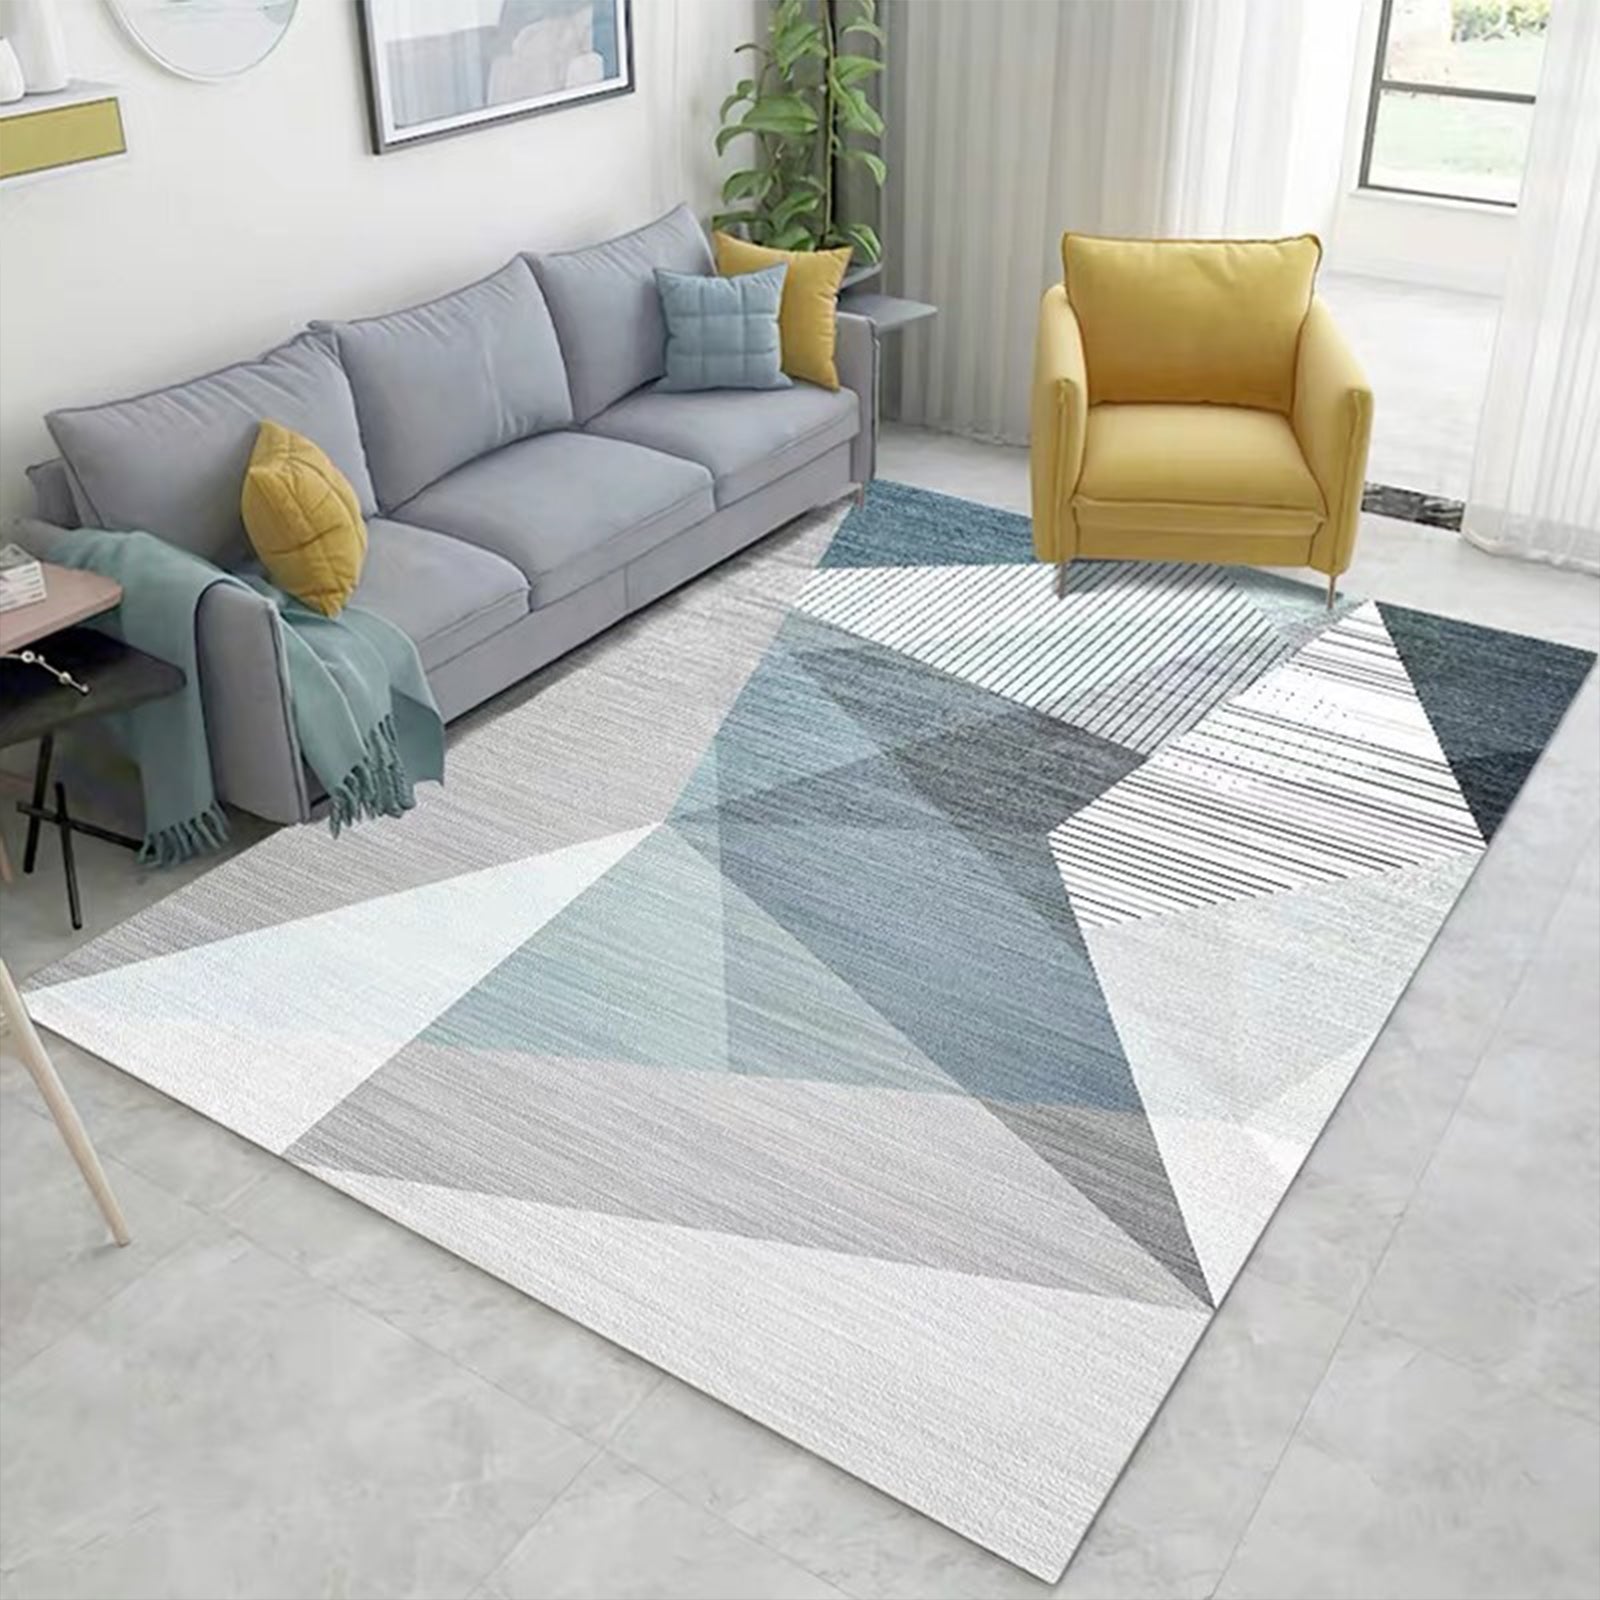 TD® Nordic ins style American light luxe tapis salon table basse tapis moderne minimaliste canapé tapis de sol complet 120x160 cm